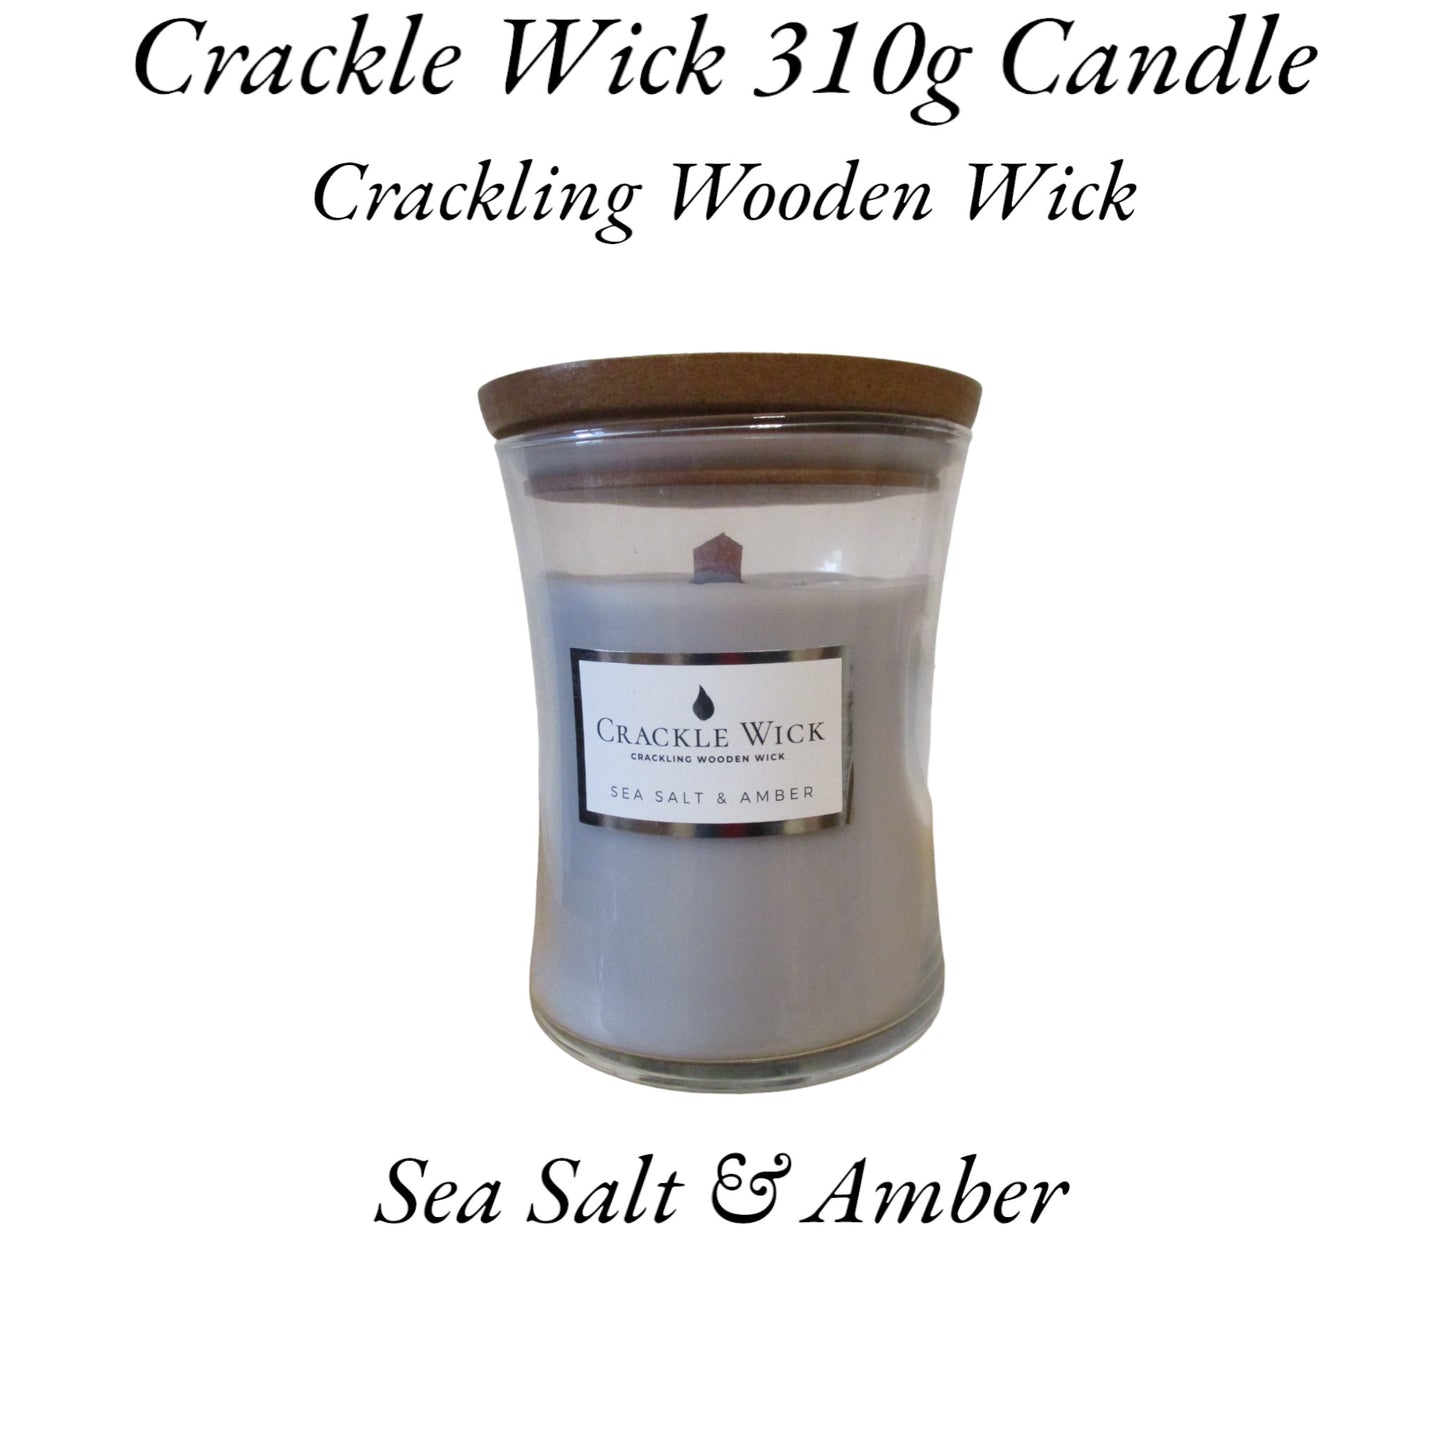 Crackle Wick - Sea Salt & Amber - Single Wick Candle Medium Hourglass 310g